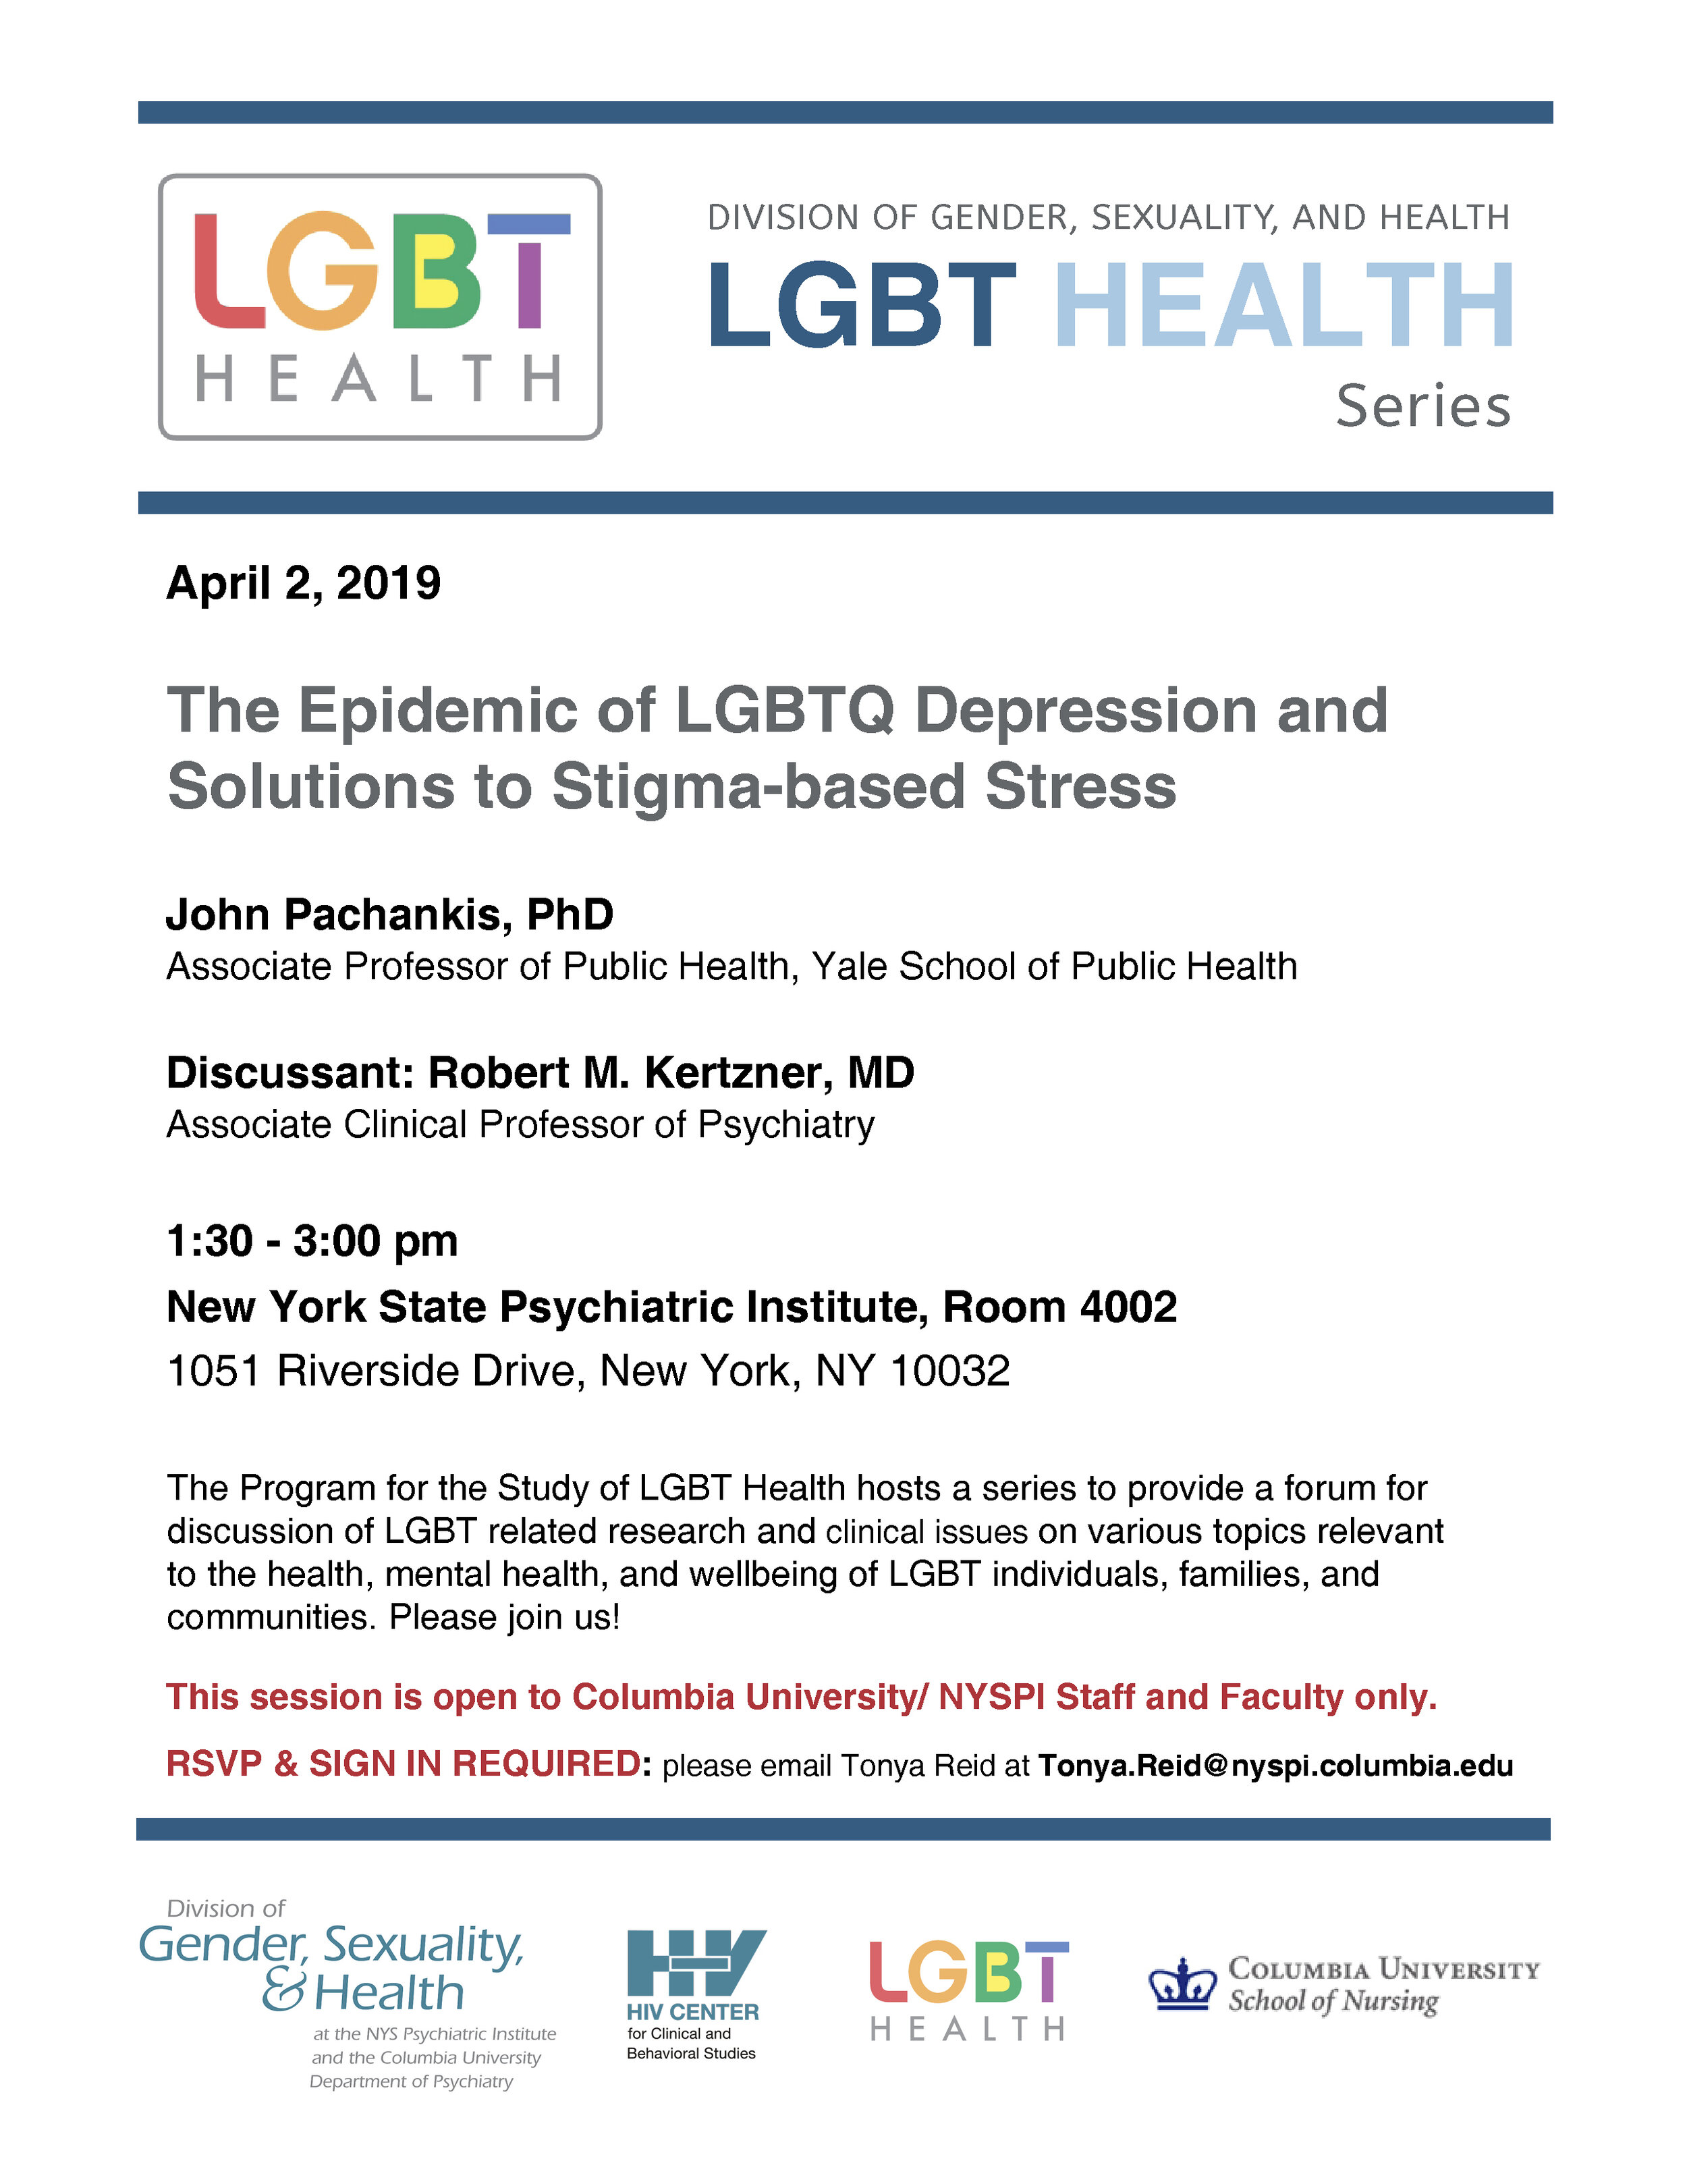 LGBT Health Series Apr 2 2019.jpg